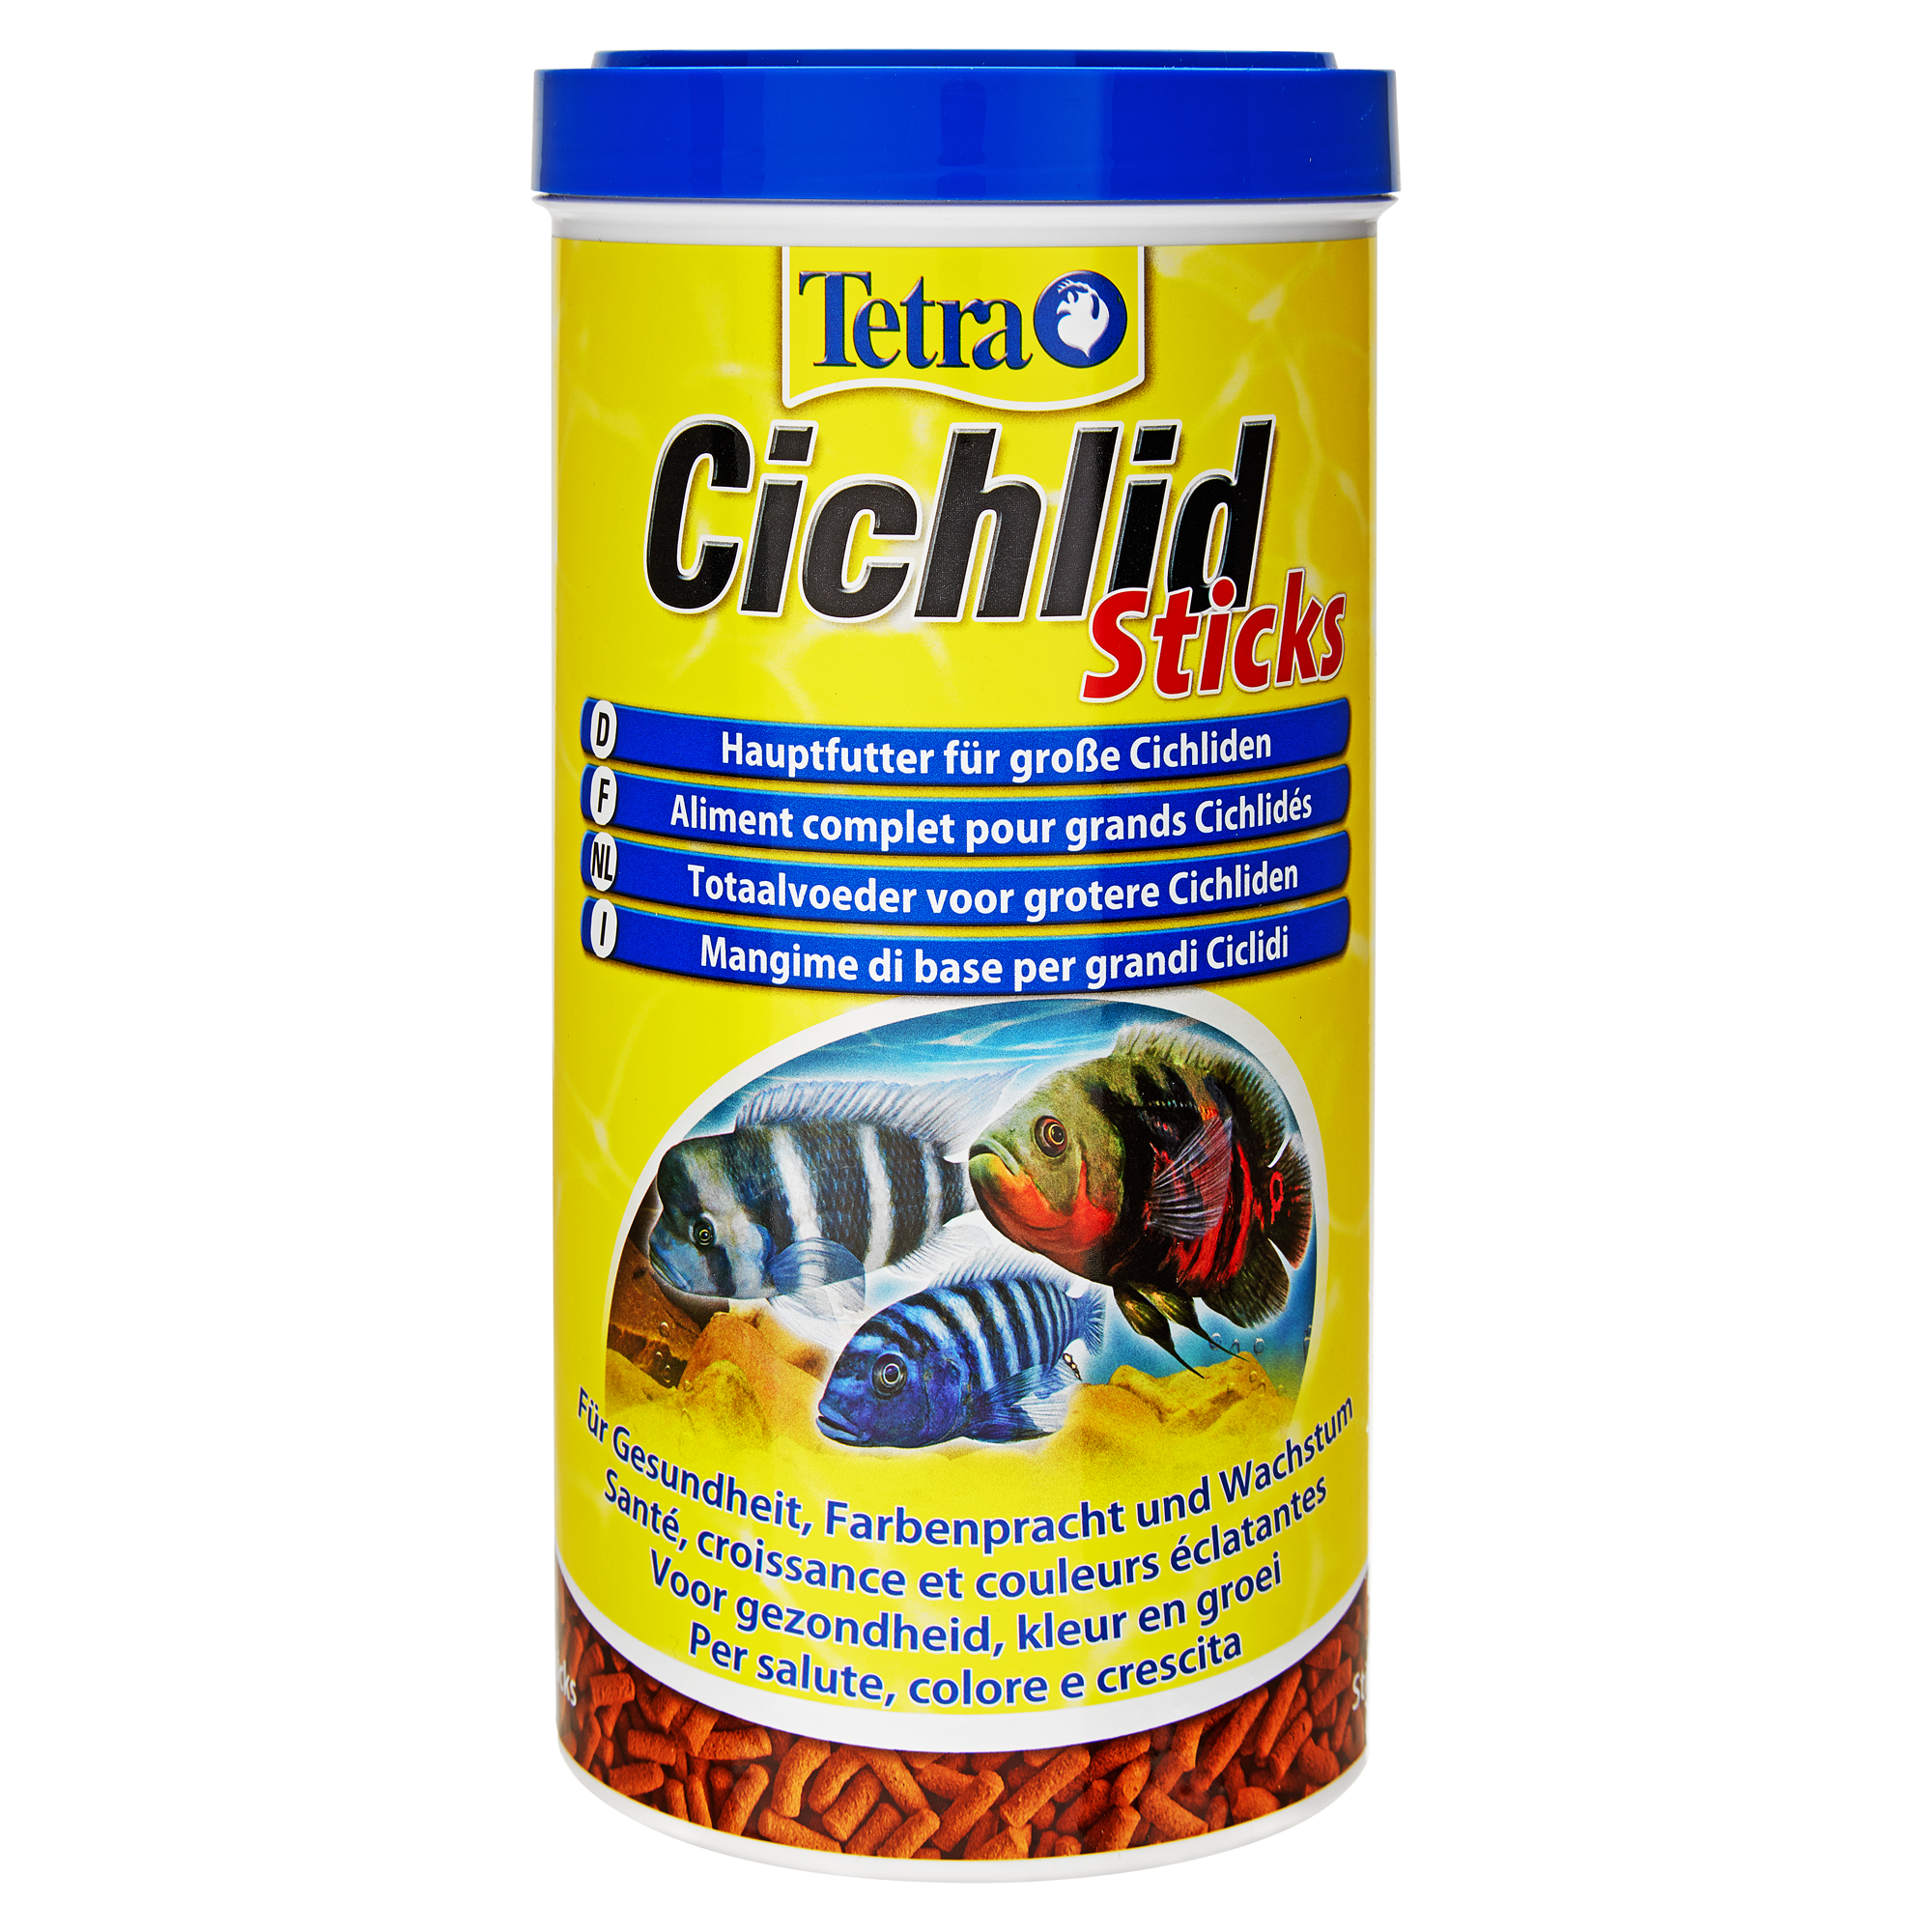 Fischfutter Cichlid Sticks 0,32 kg + product picture